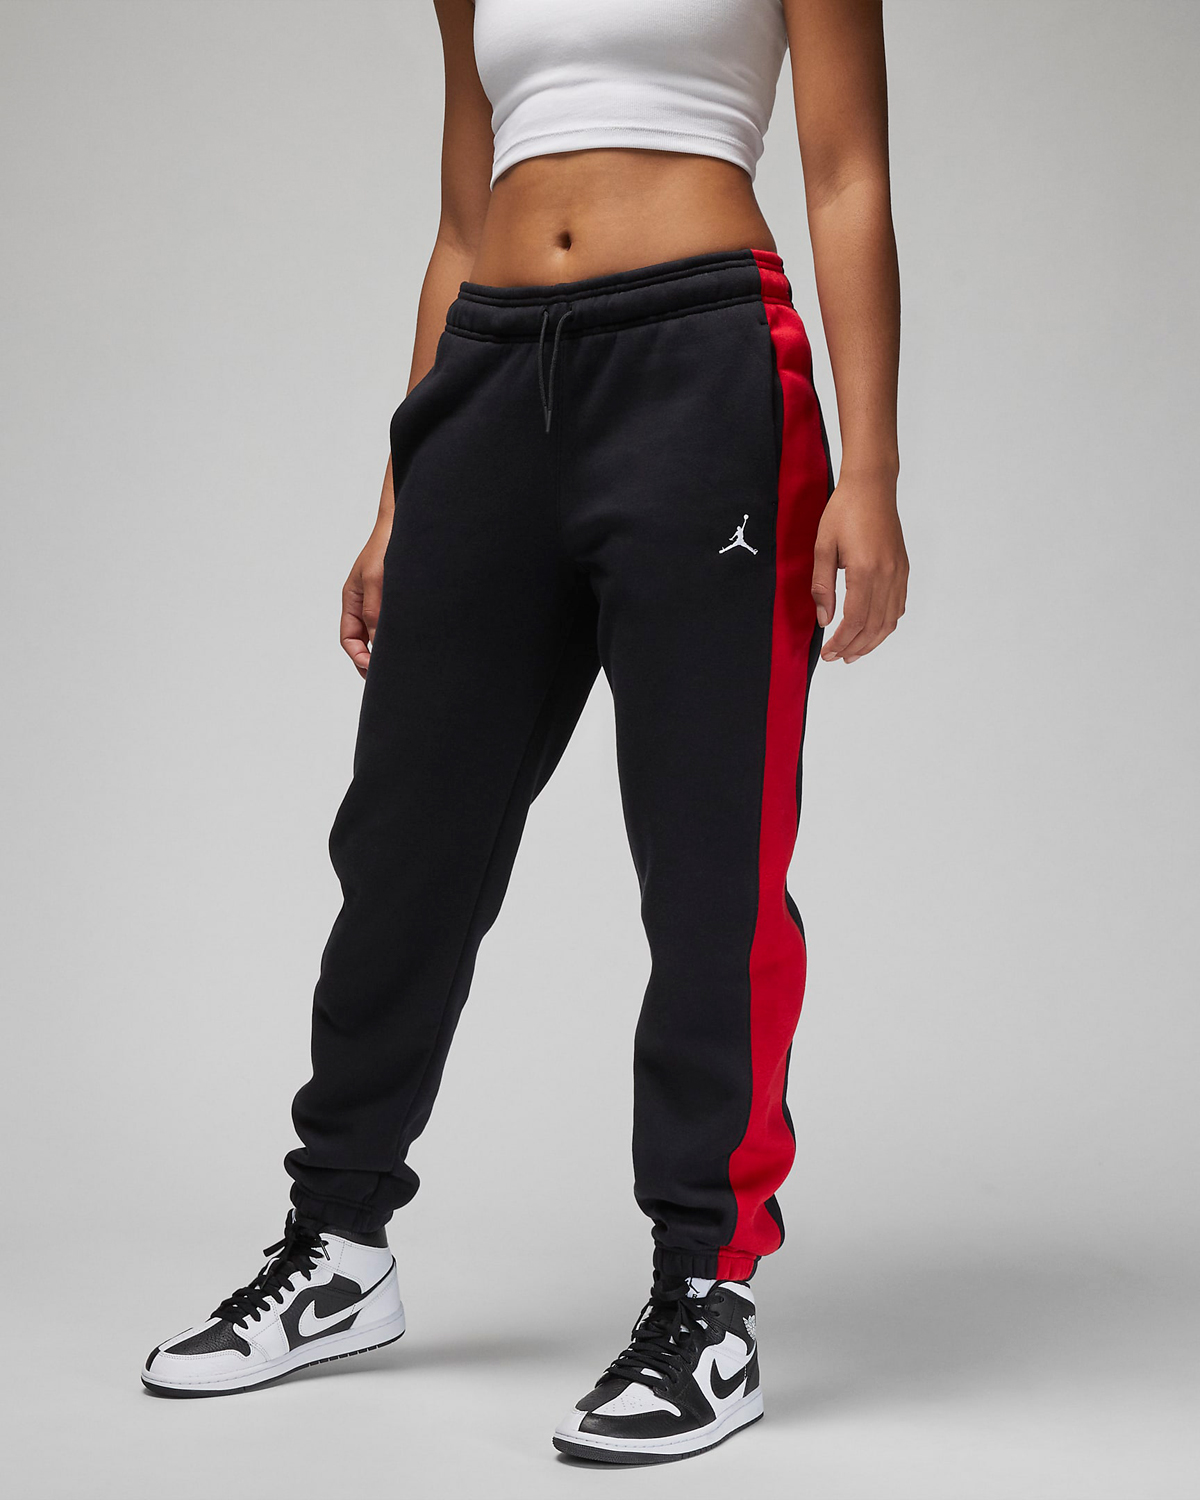 Jordan-Brooklyn-Fleece-Womens-Pants-Black-Gym-Red